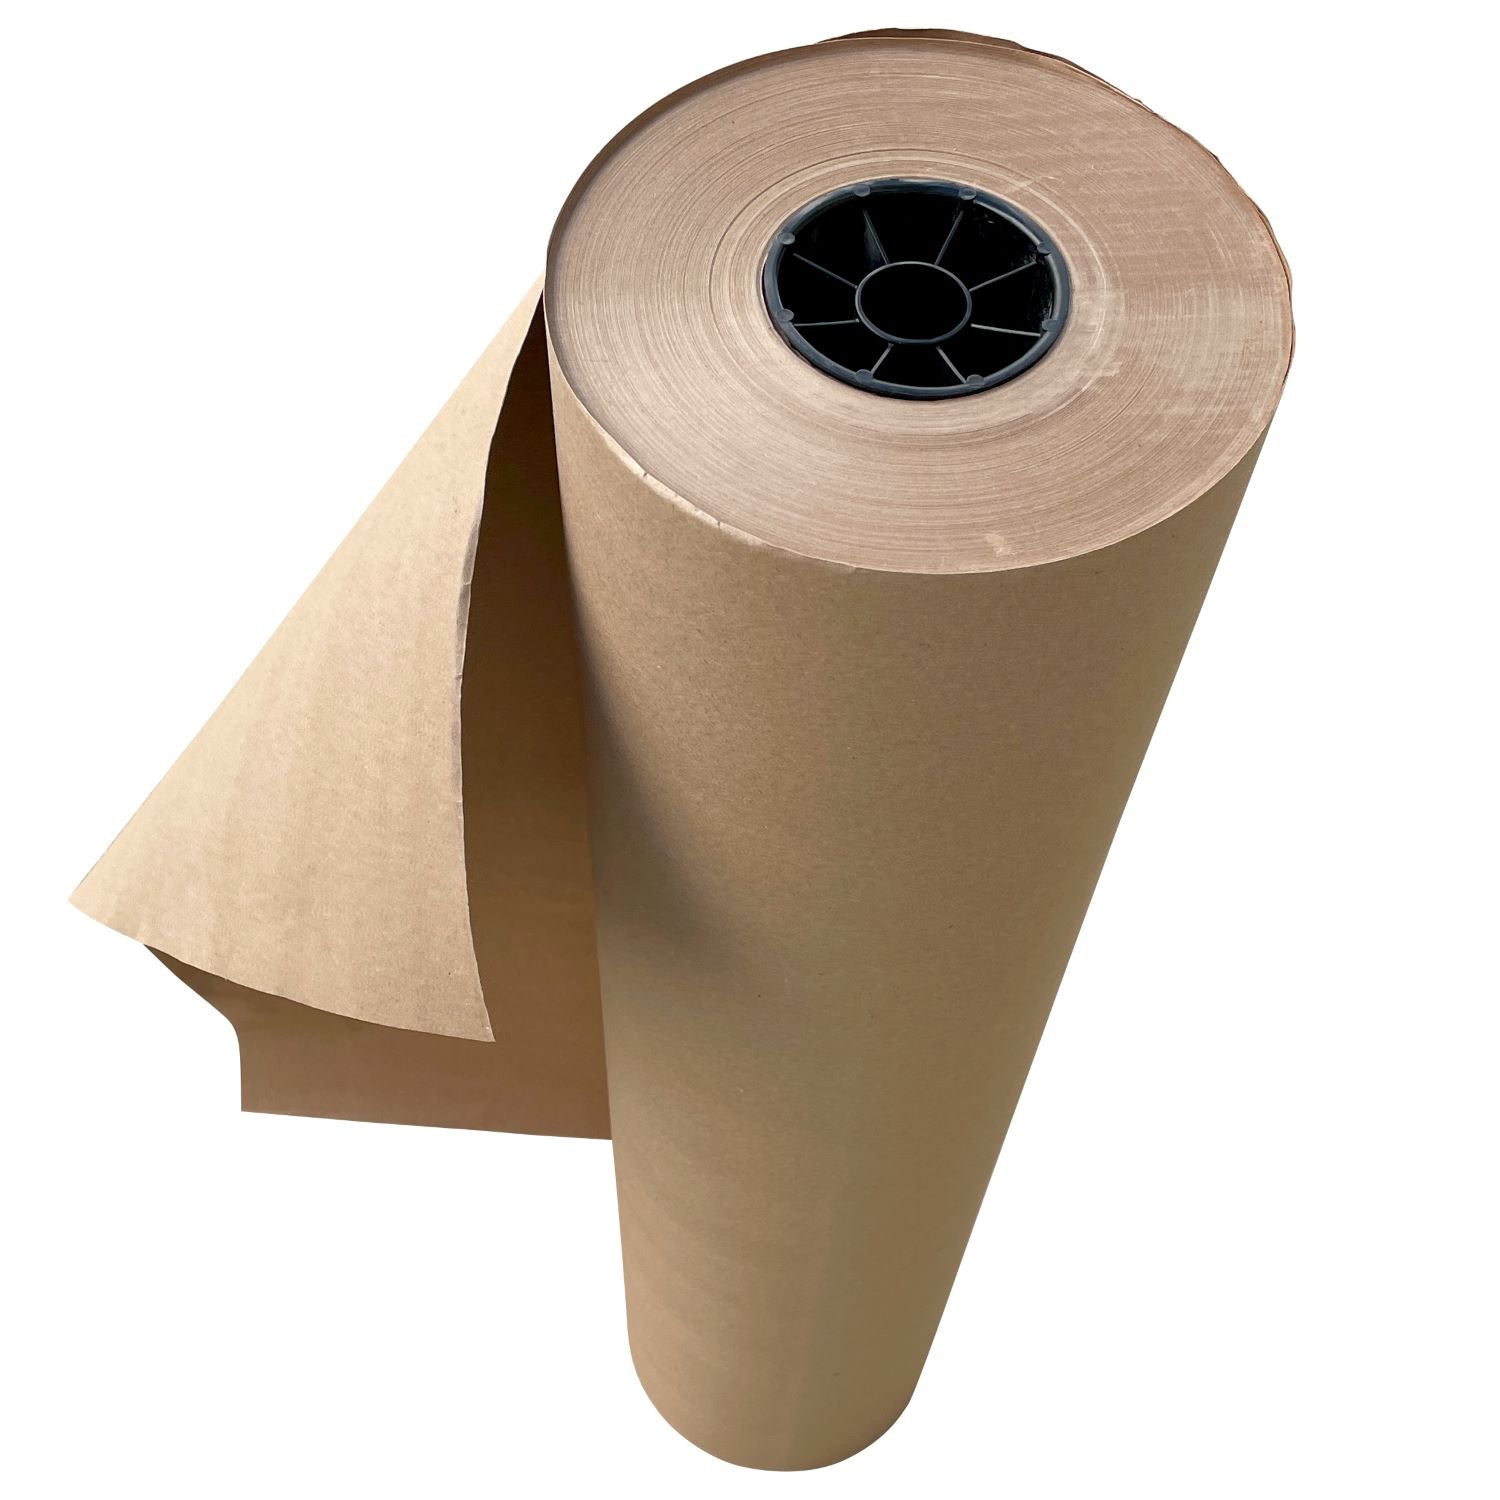 Heavy Duty Kraft Paper Rolls - 75 lb. Recycled Paper (Brown)